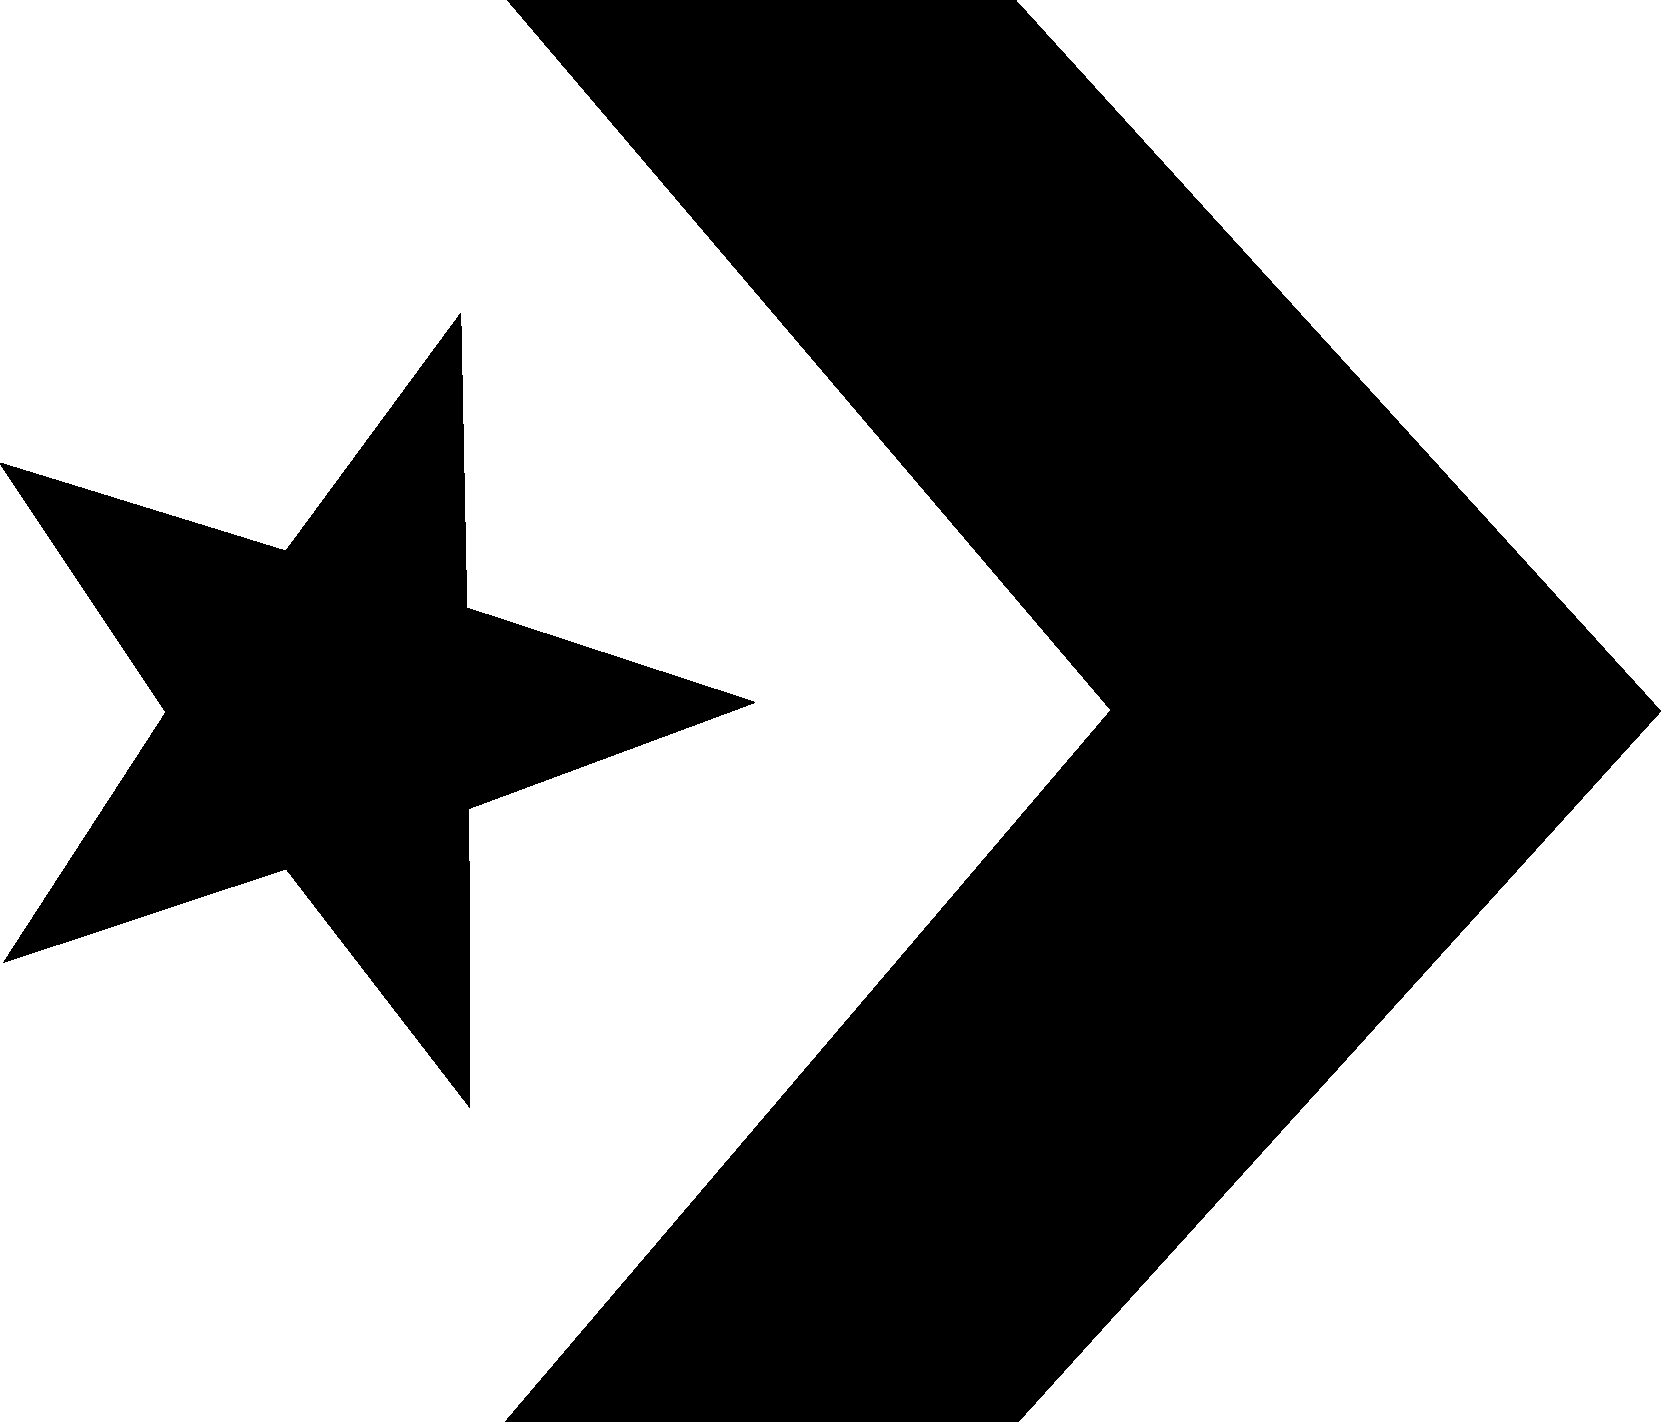 Save - Logo Converse All Star (1661x1422)